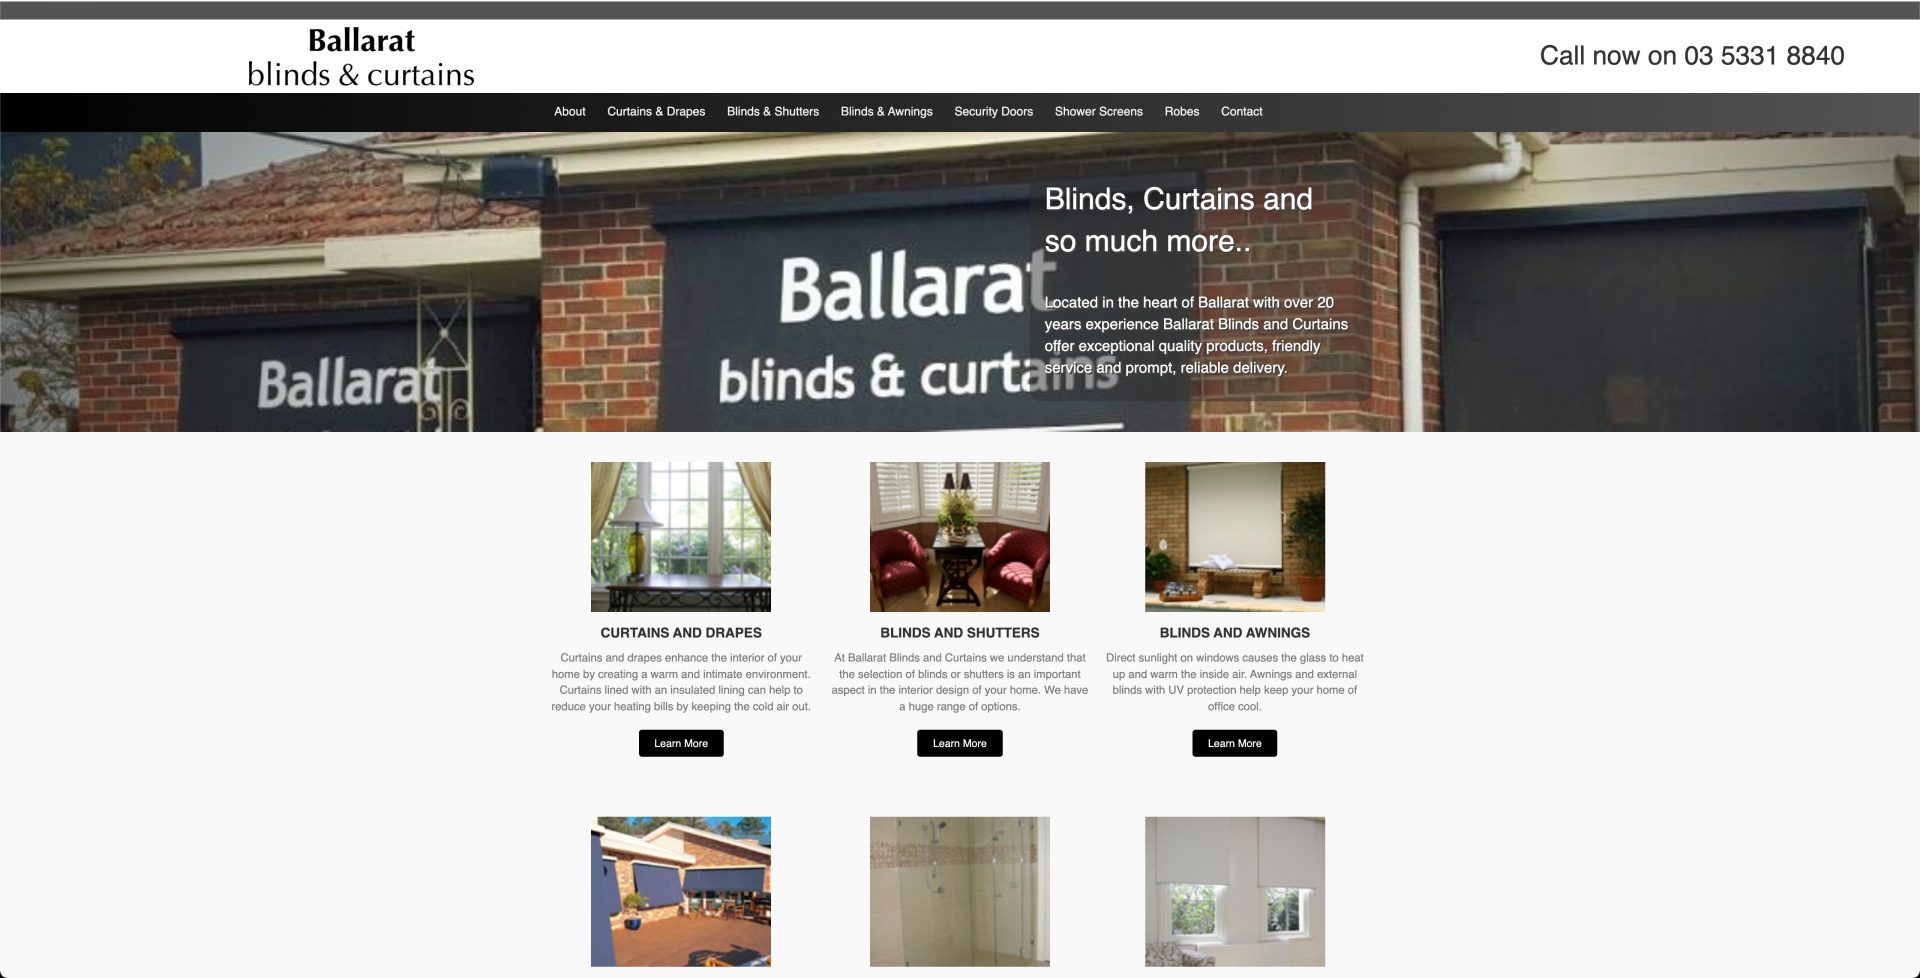 Ballarat Blinds